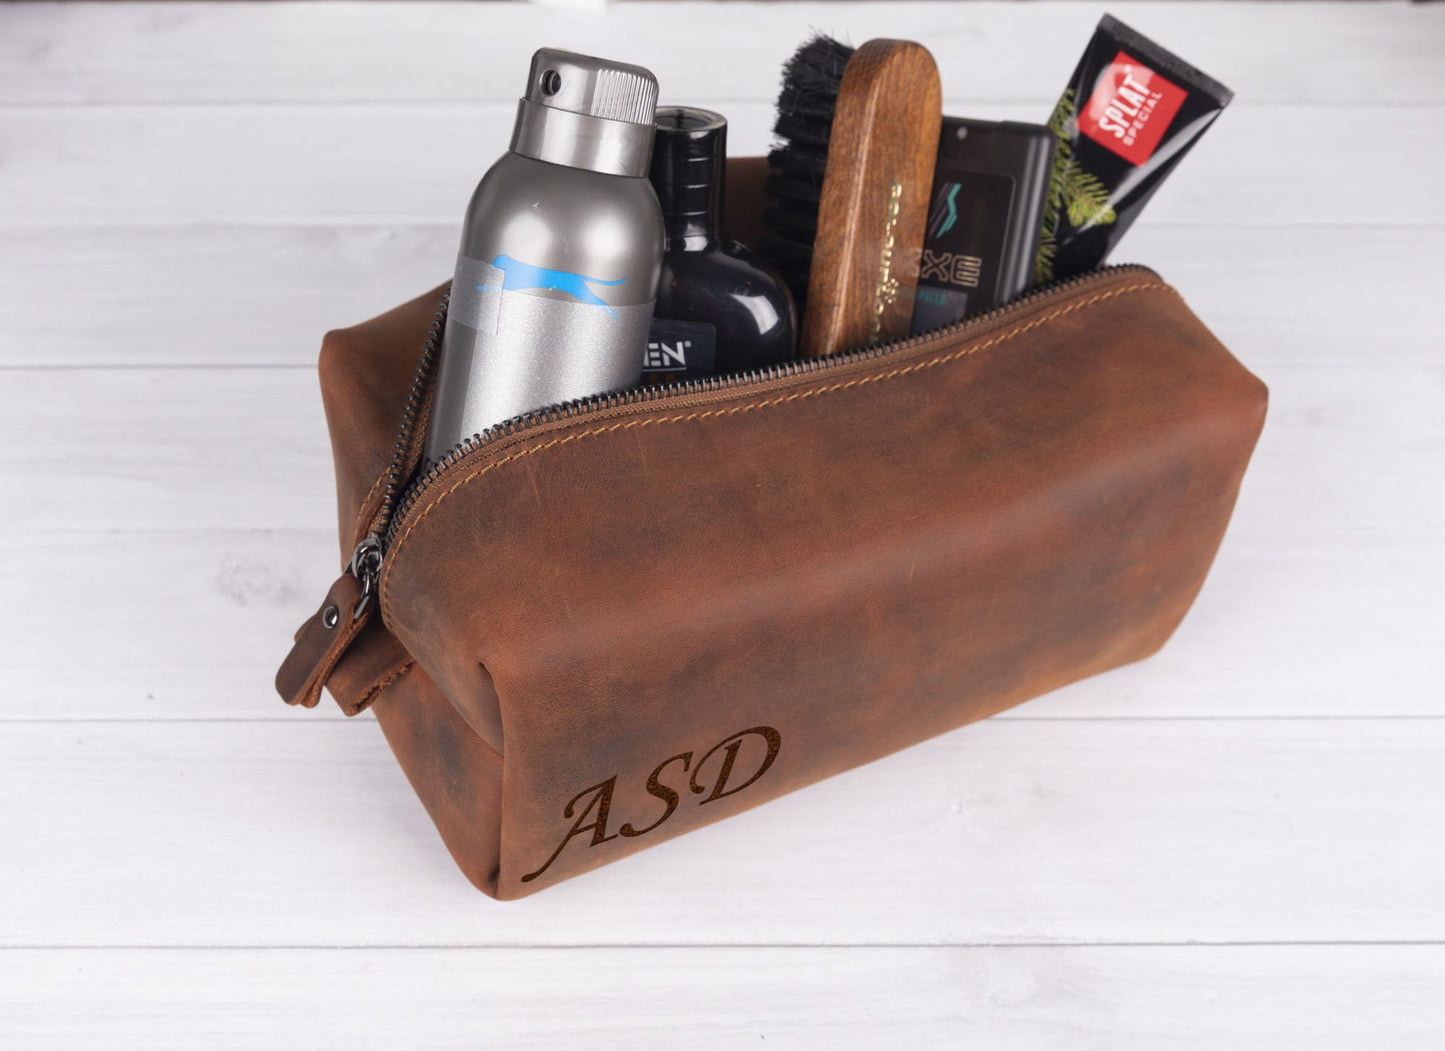 Engraved Genuine Leather Makeup Bag, Cosmetic Organizer, Leather Dopp Kit, LHG009